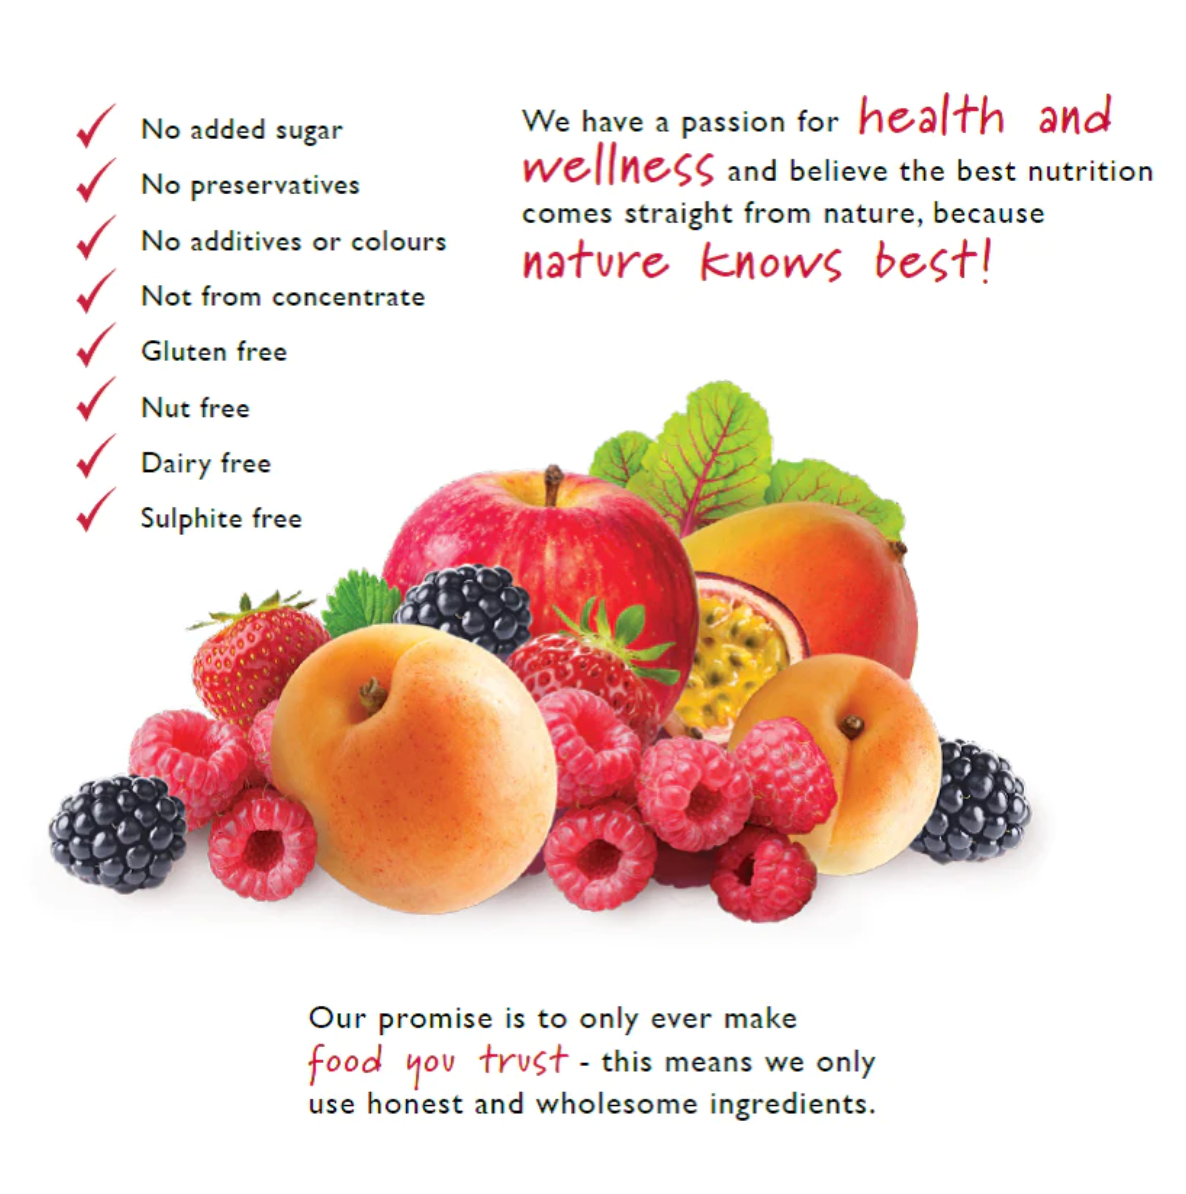 Annies food you trust 100% 水果條 20g - 蘋果樹莓 | Fruit Bar - Apple and Raspberry 20g